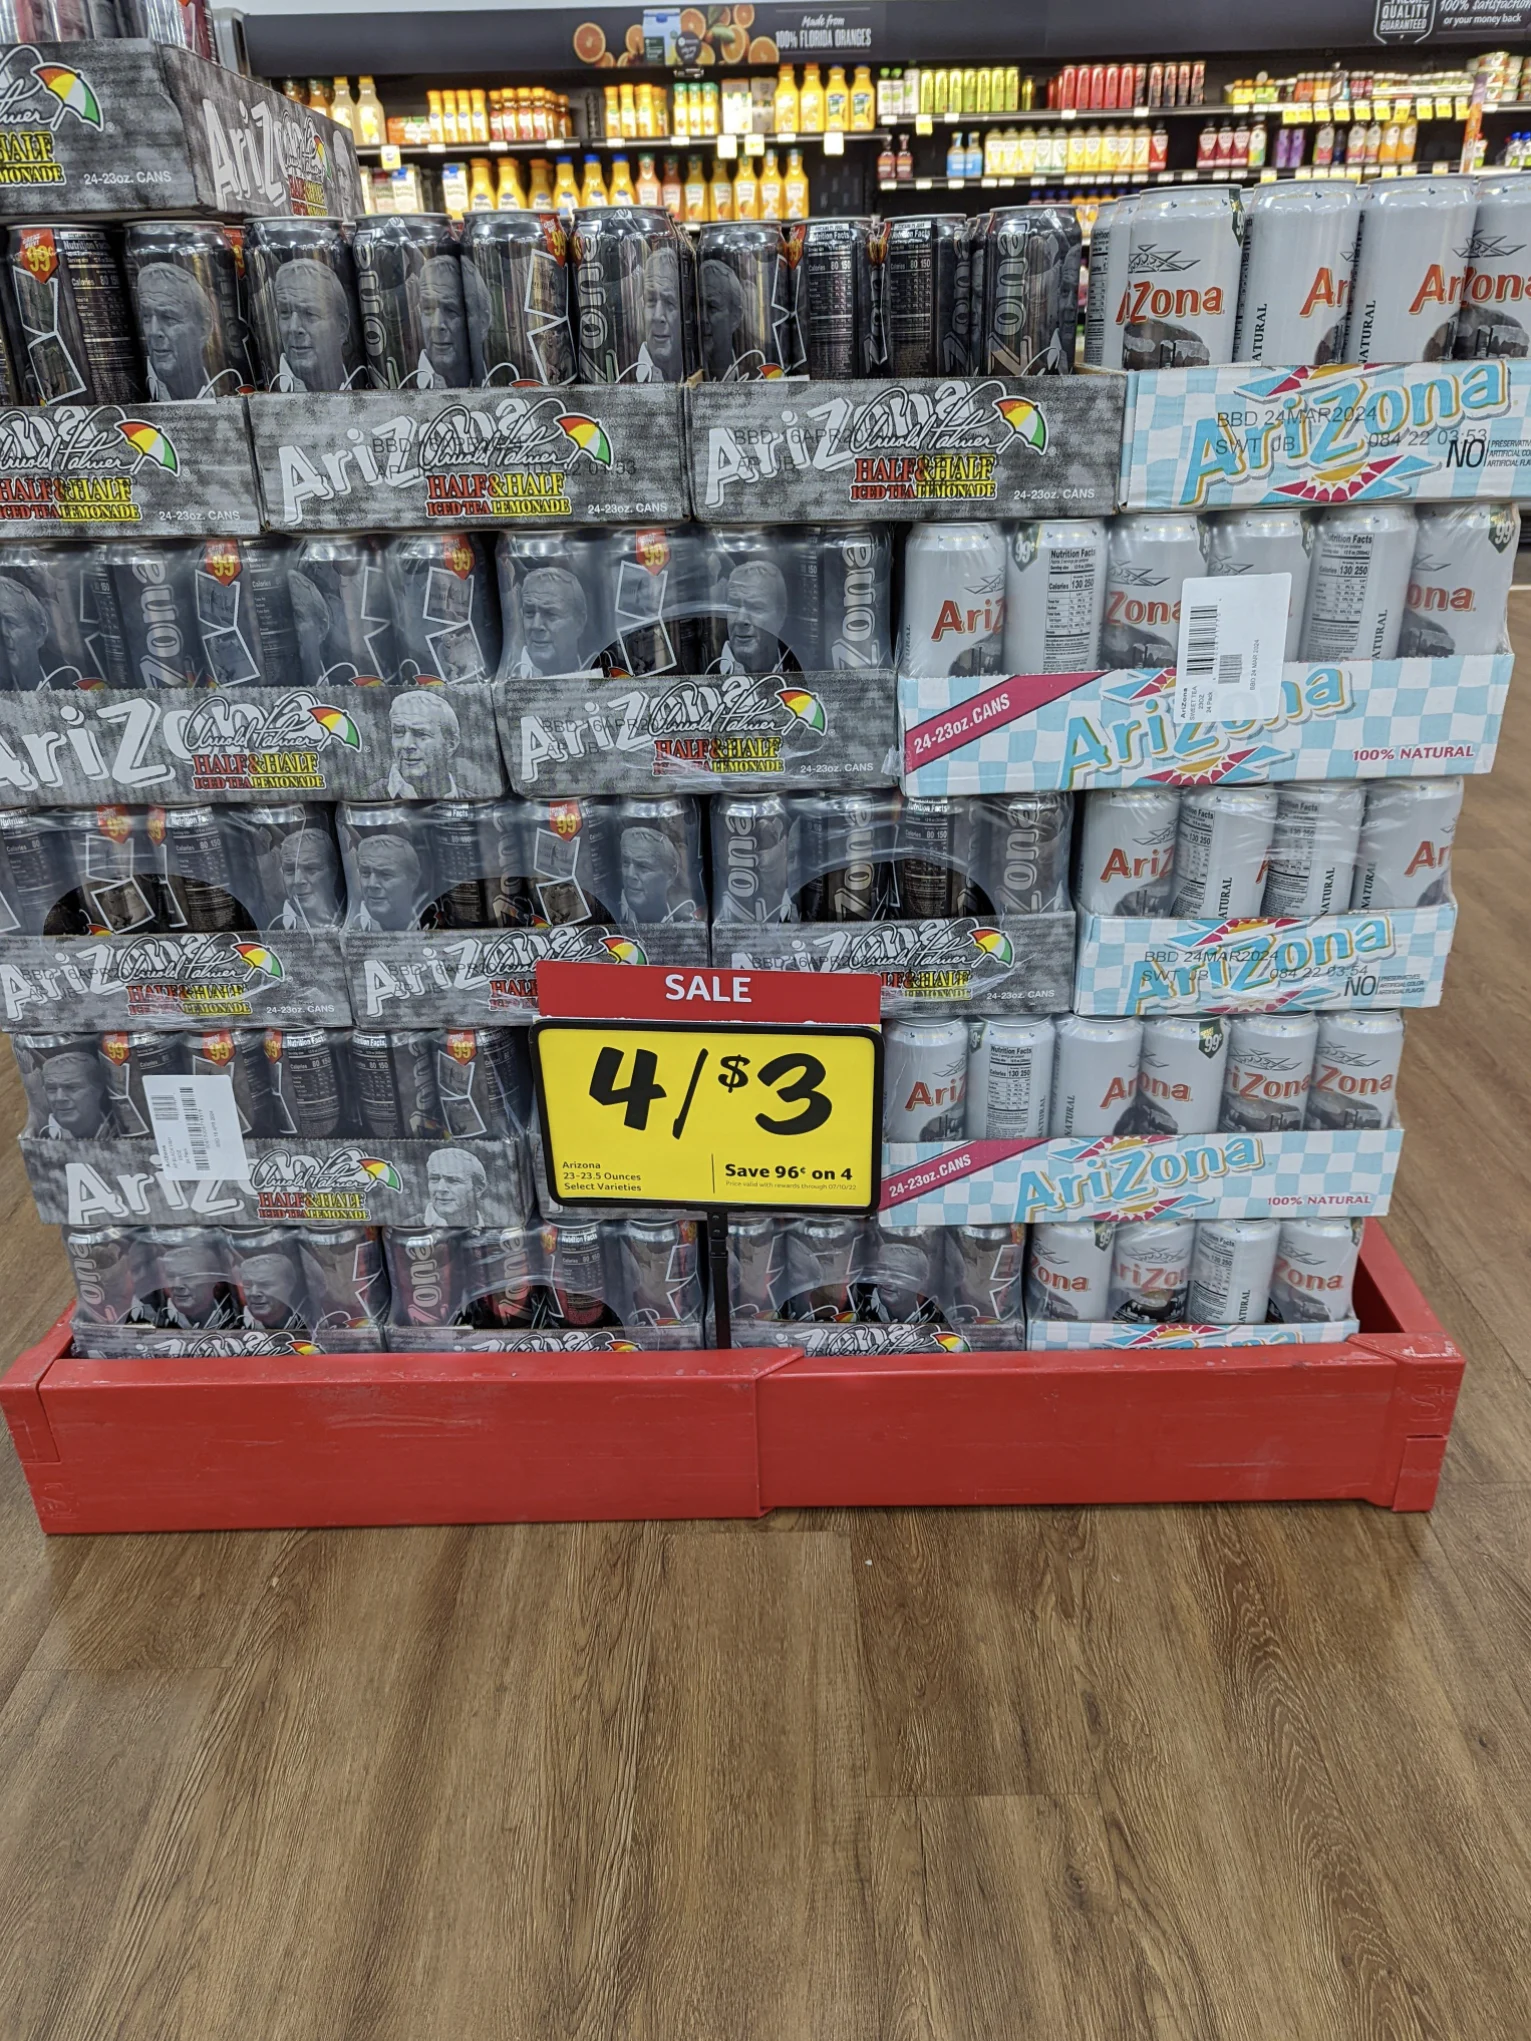 A photo of AriZona tea cans on sale. 